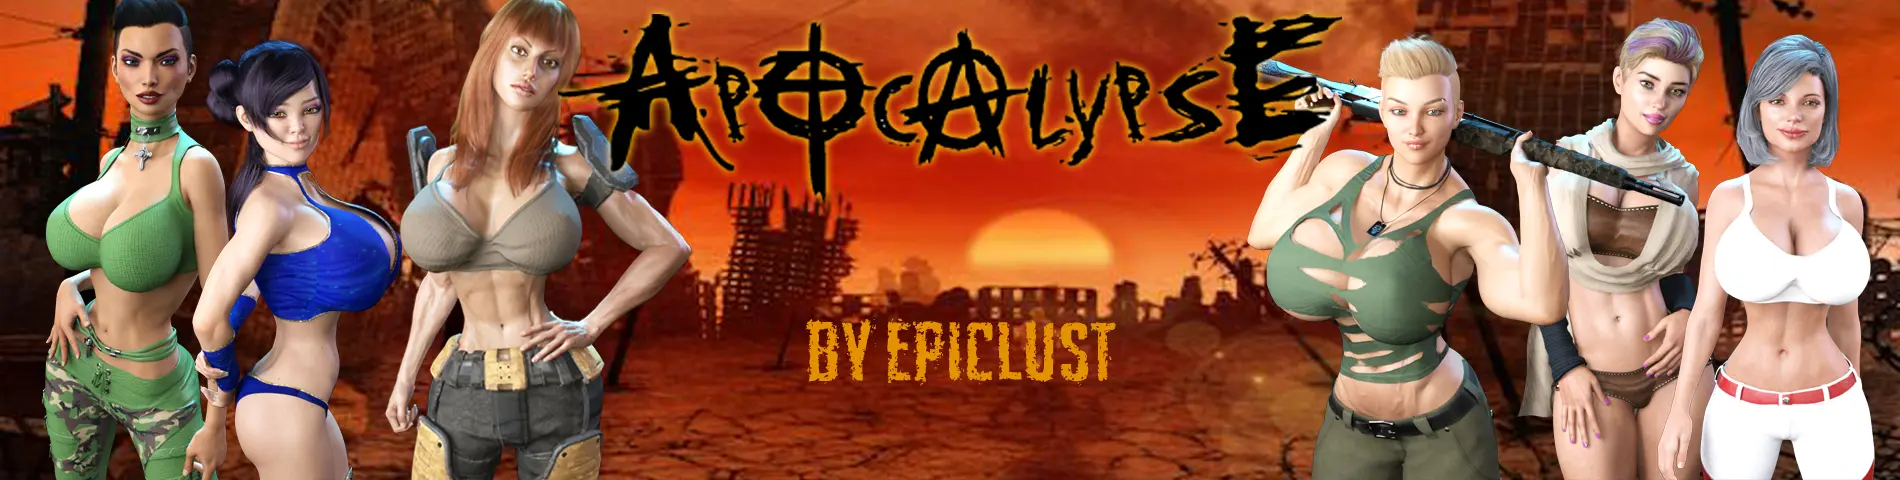 Apocalypse [v0.3.2] main image